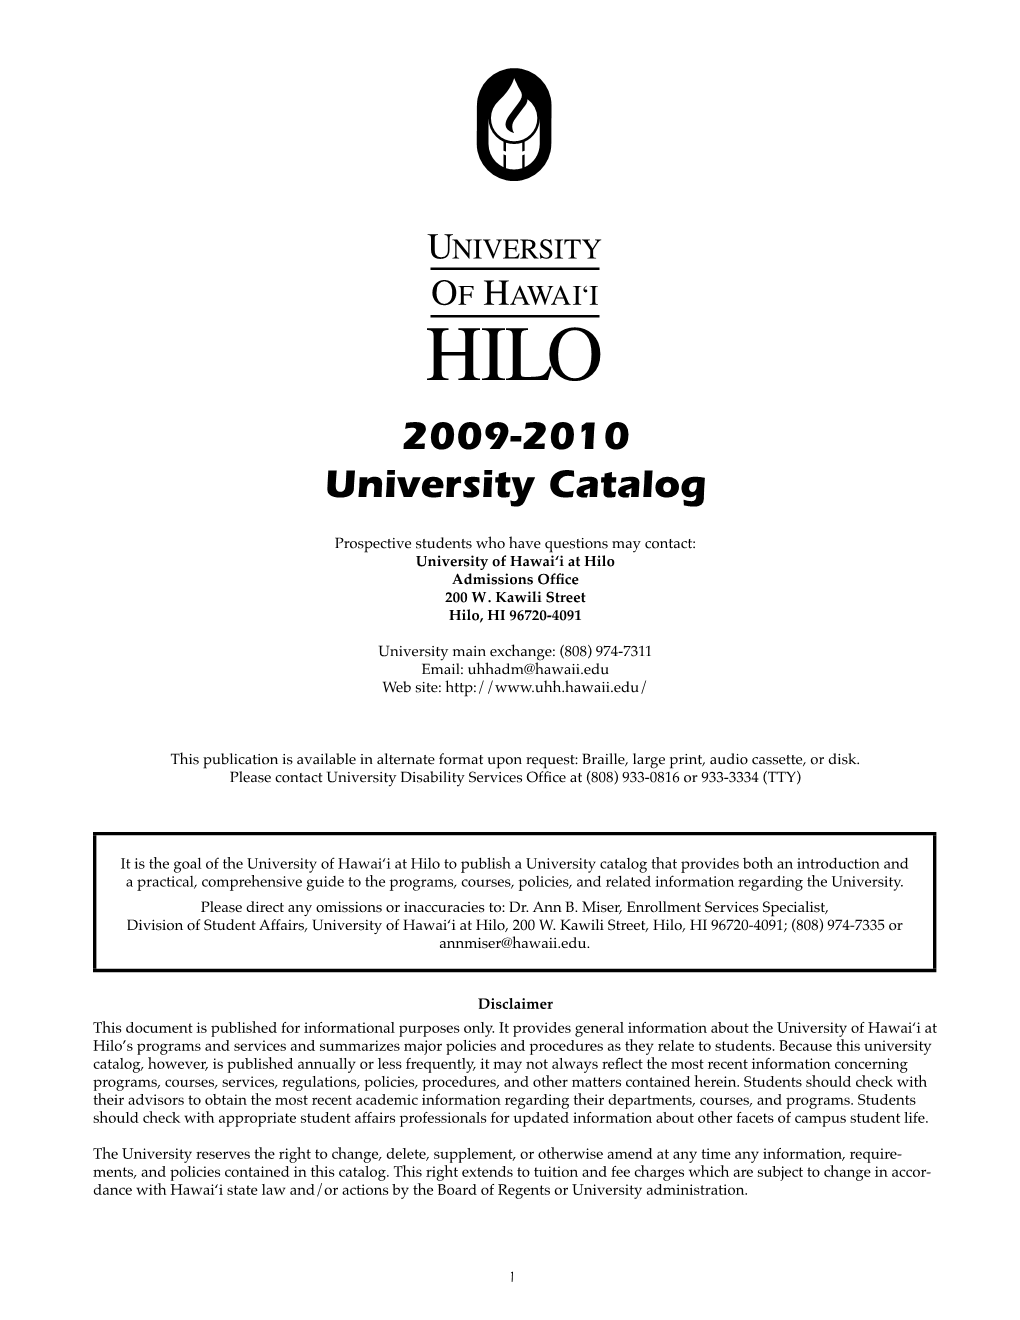 2009-2010 University Catalog (PDF)